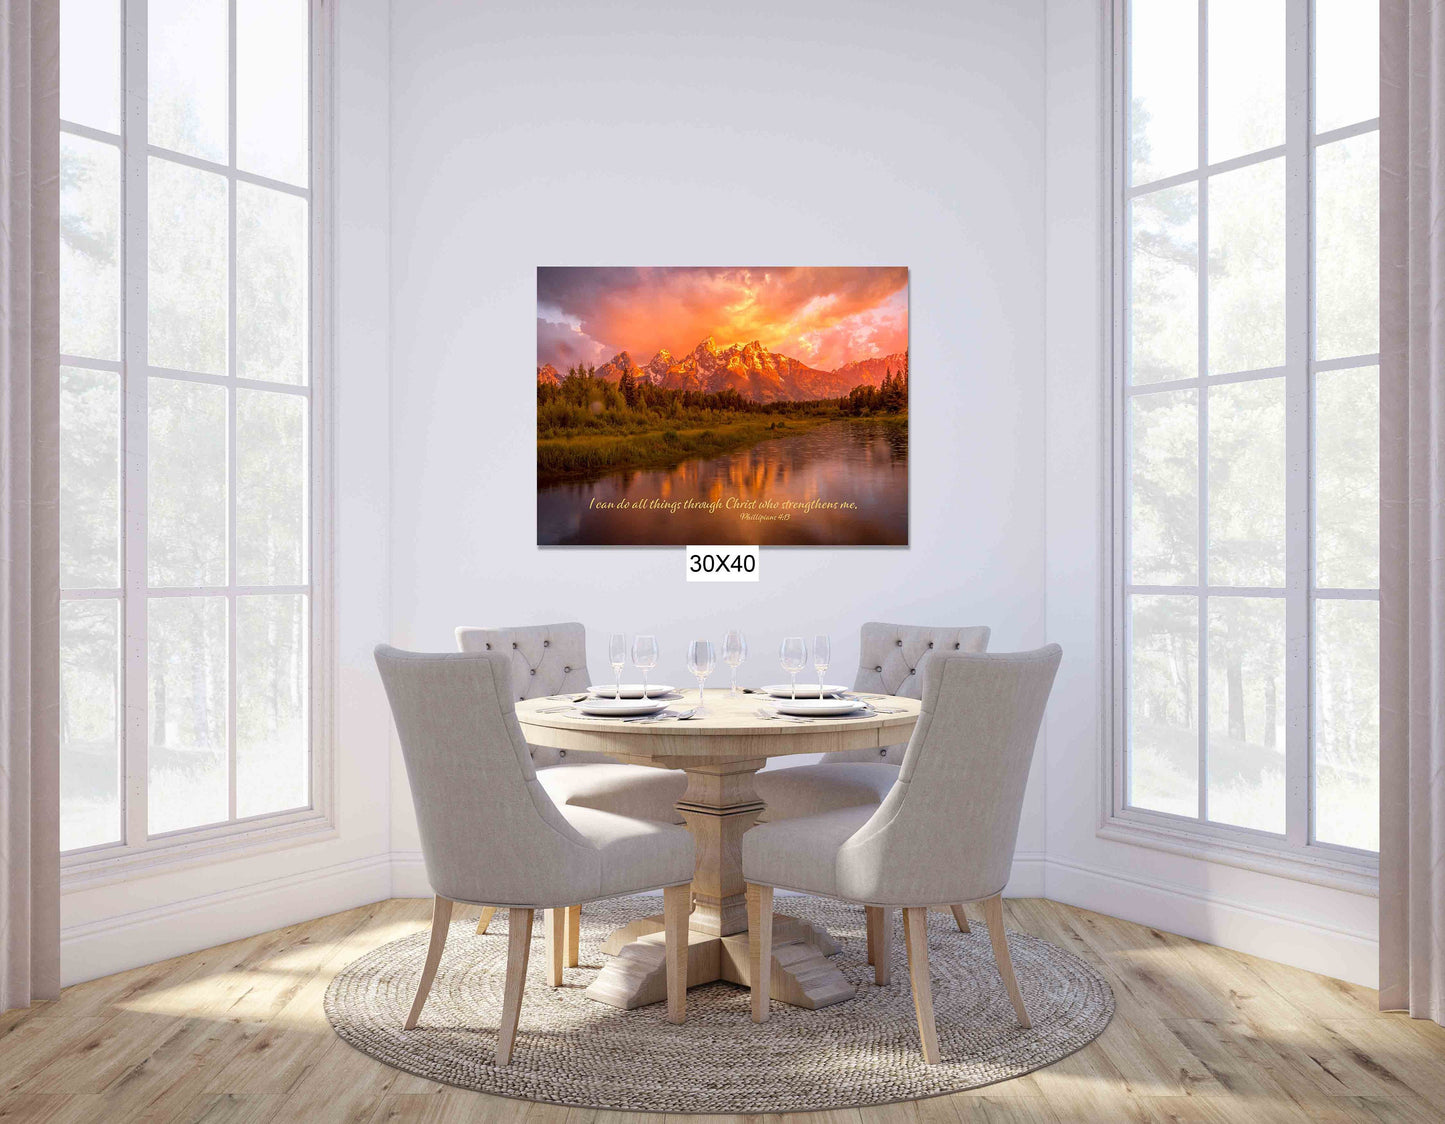 Philippians 4:13 Christian Inspirational Wall Art, Grand Teton National Park Mountain Sunrise, Wyoming Landscape Photography, Large Canvas